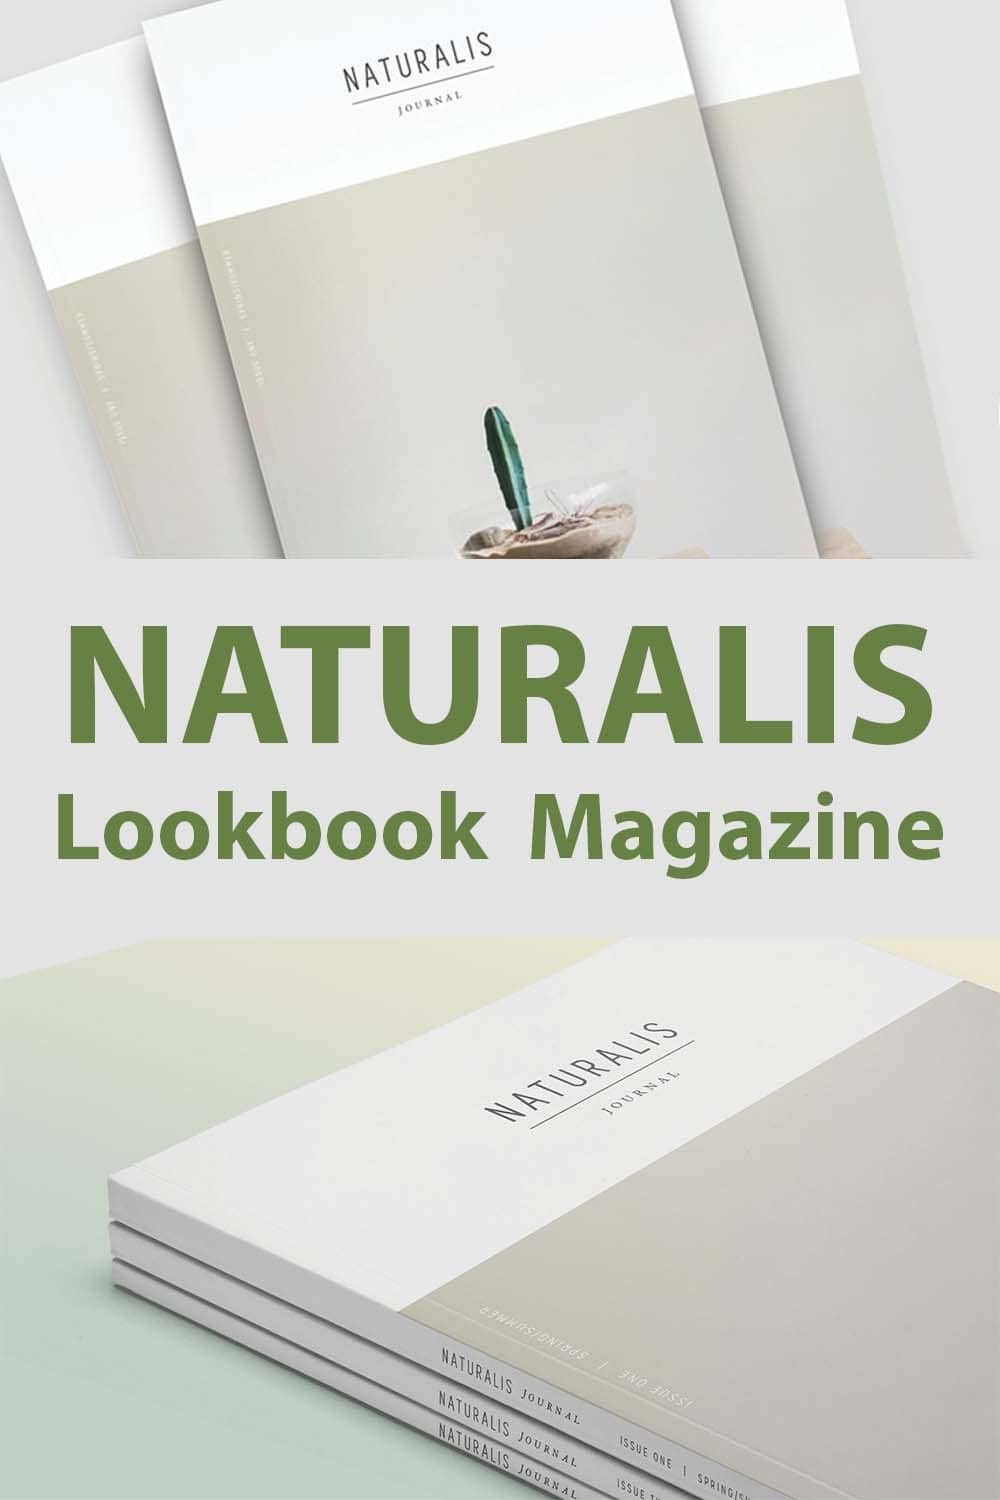 naturalis lookbook magazine pinterest image.